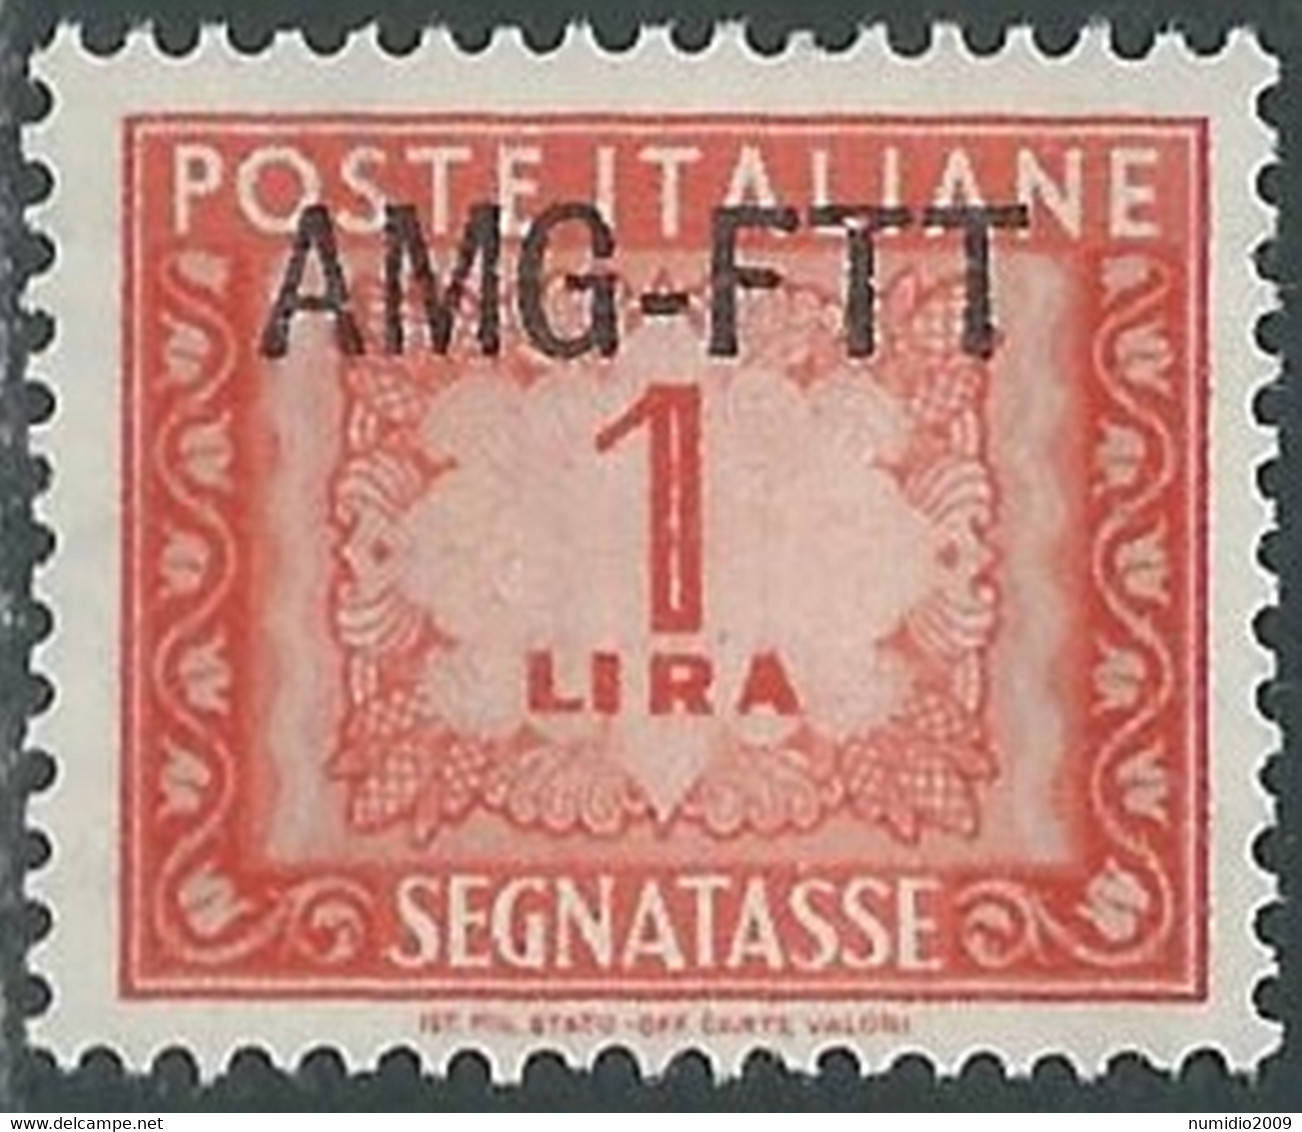 1949-54 TRIESTE A SEGNATASSE 1 LIRA MNH ** - RE10-8 - Segnatasse